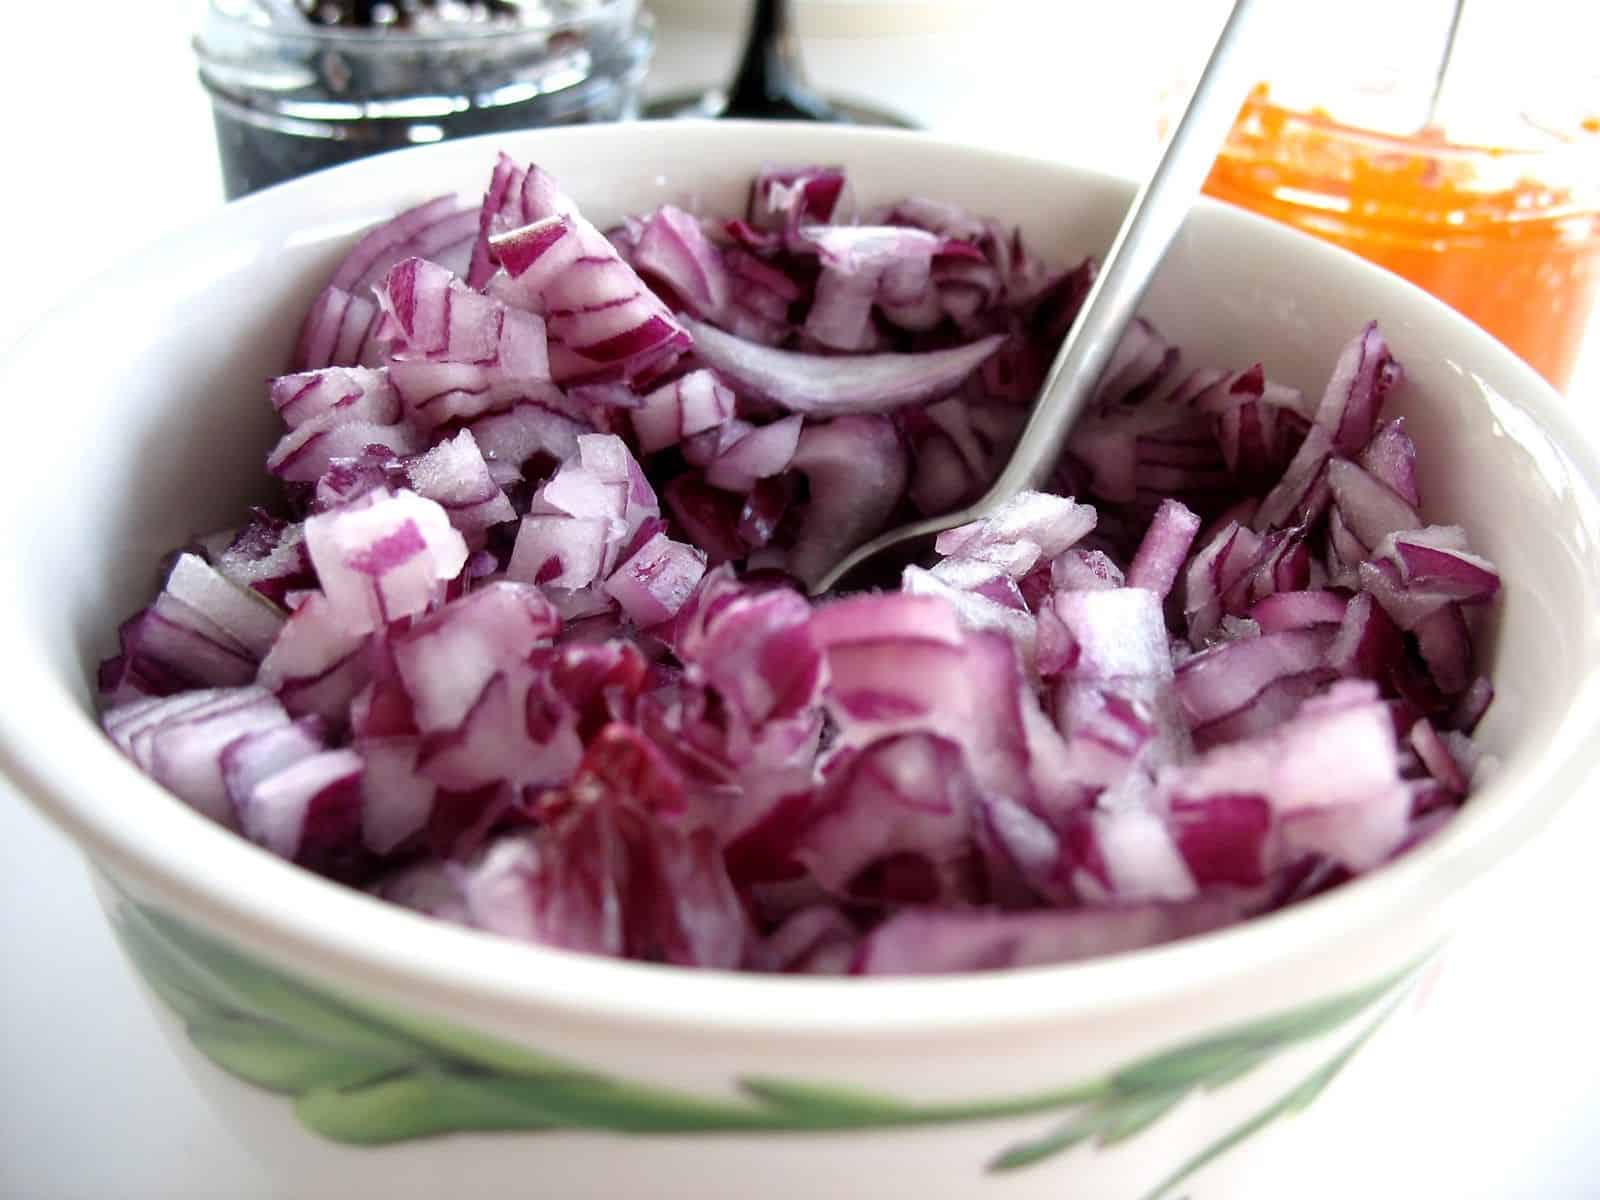 Eat onion for hair growth